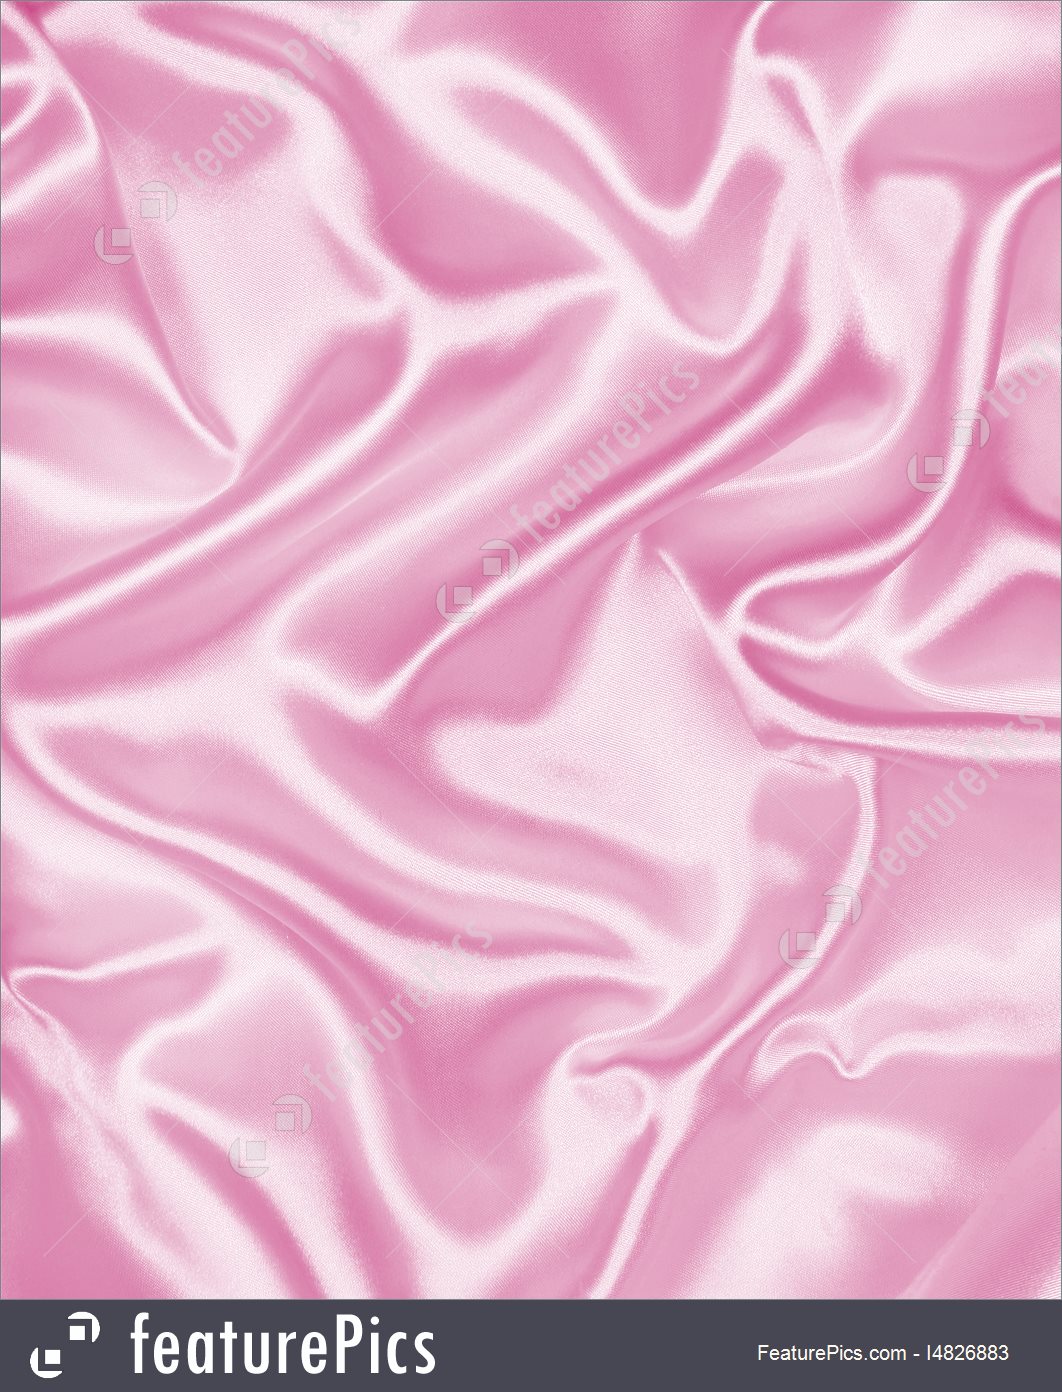 Smooth Elegant Pink Silk Or Satin Texture As Background